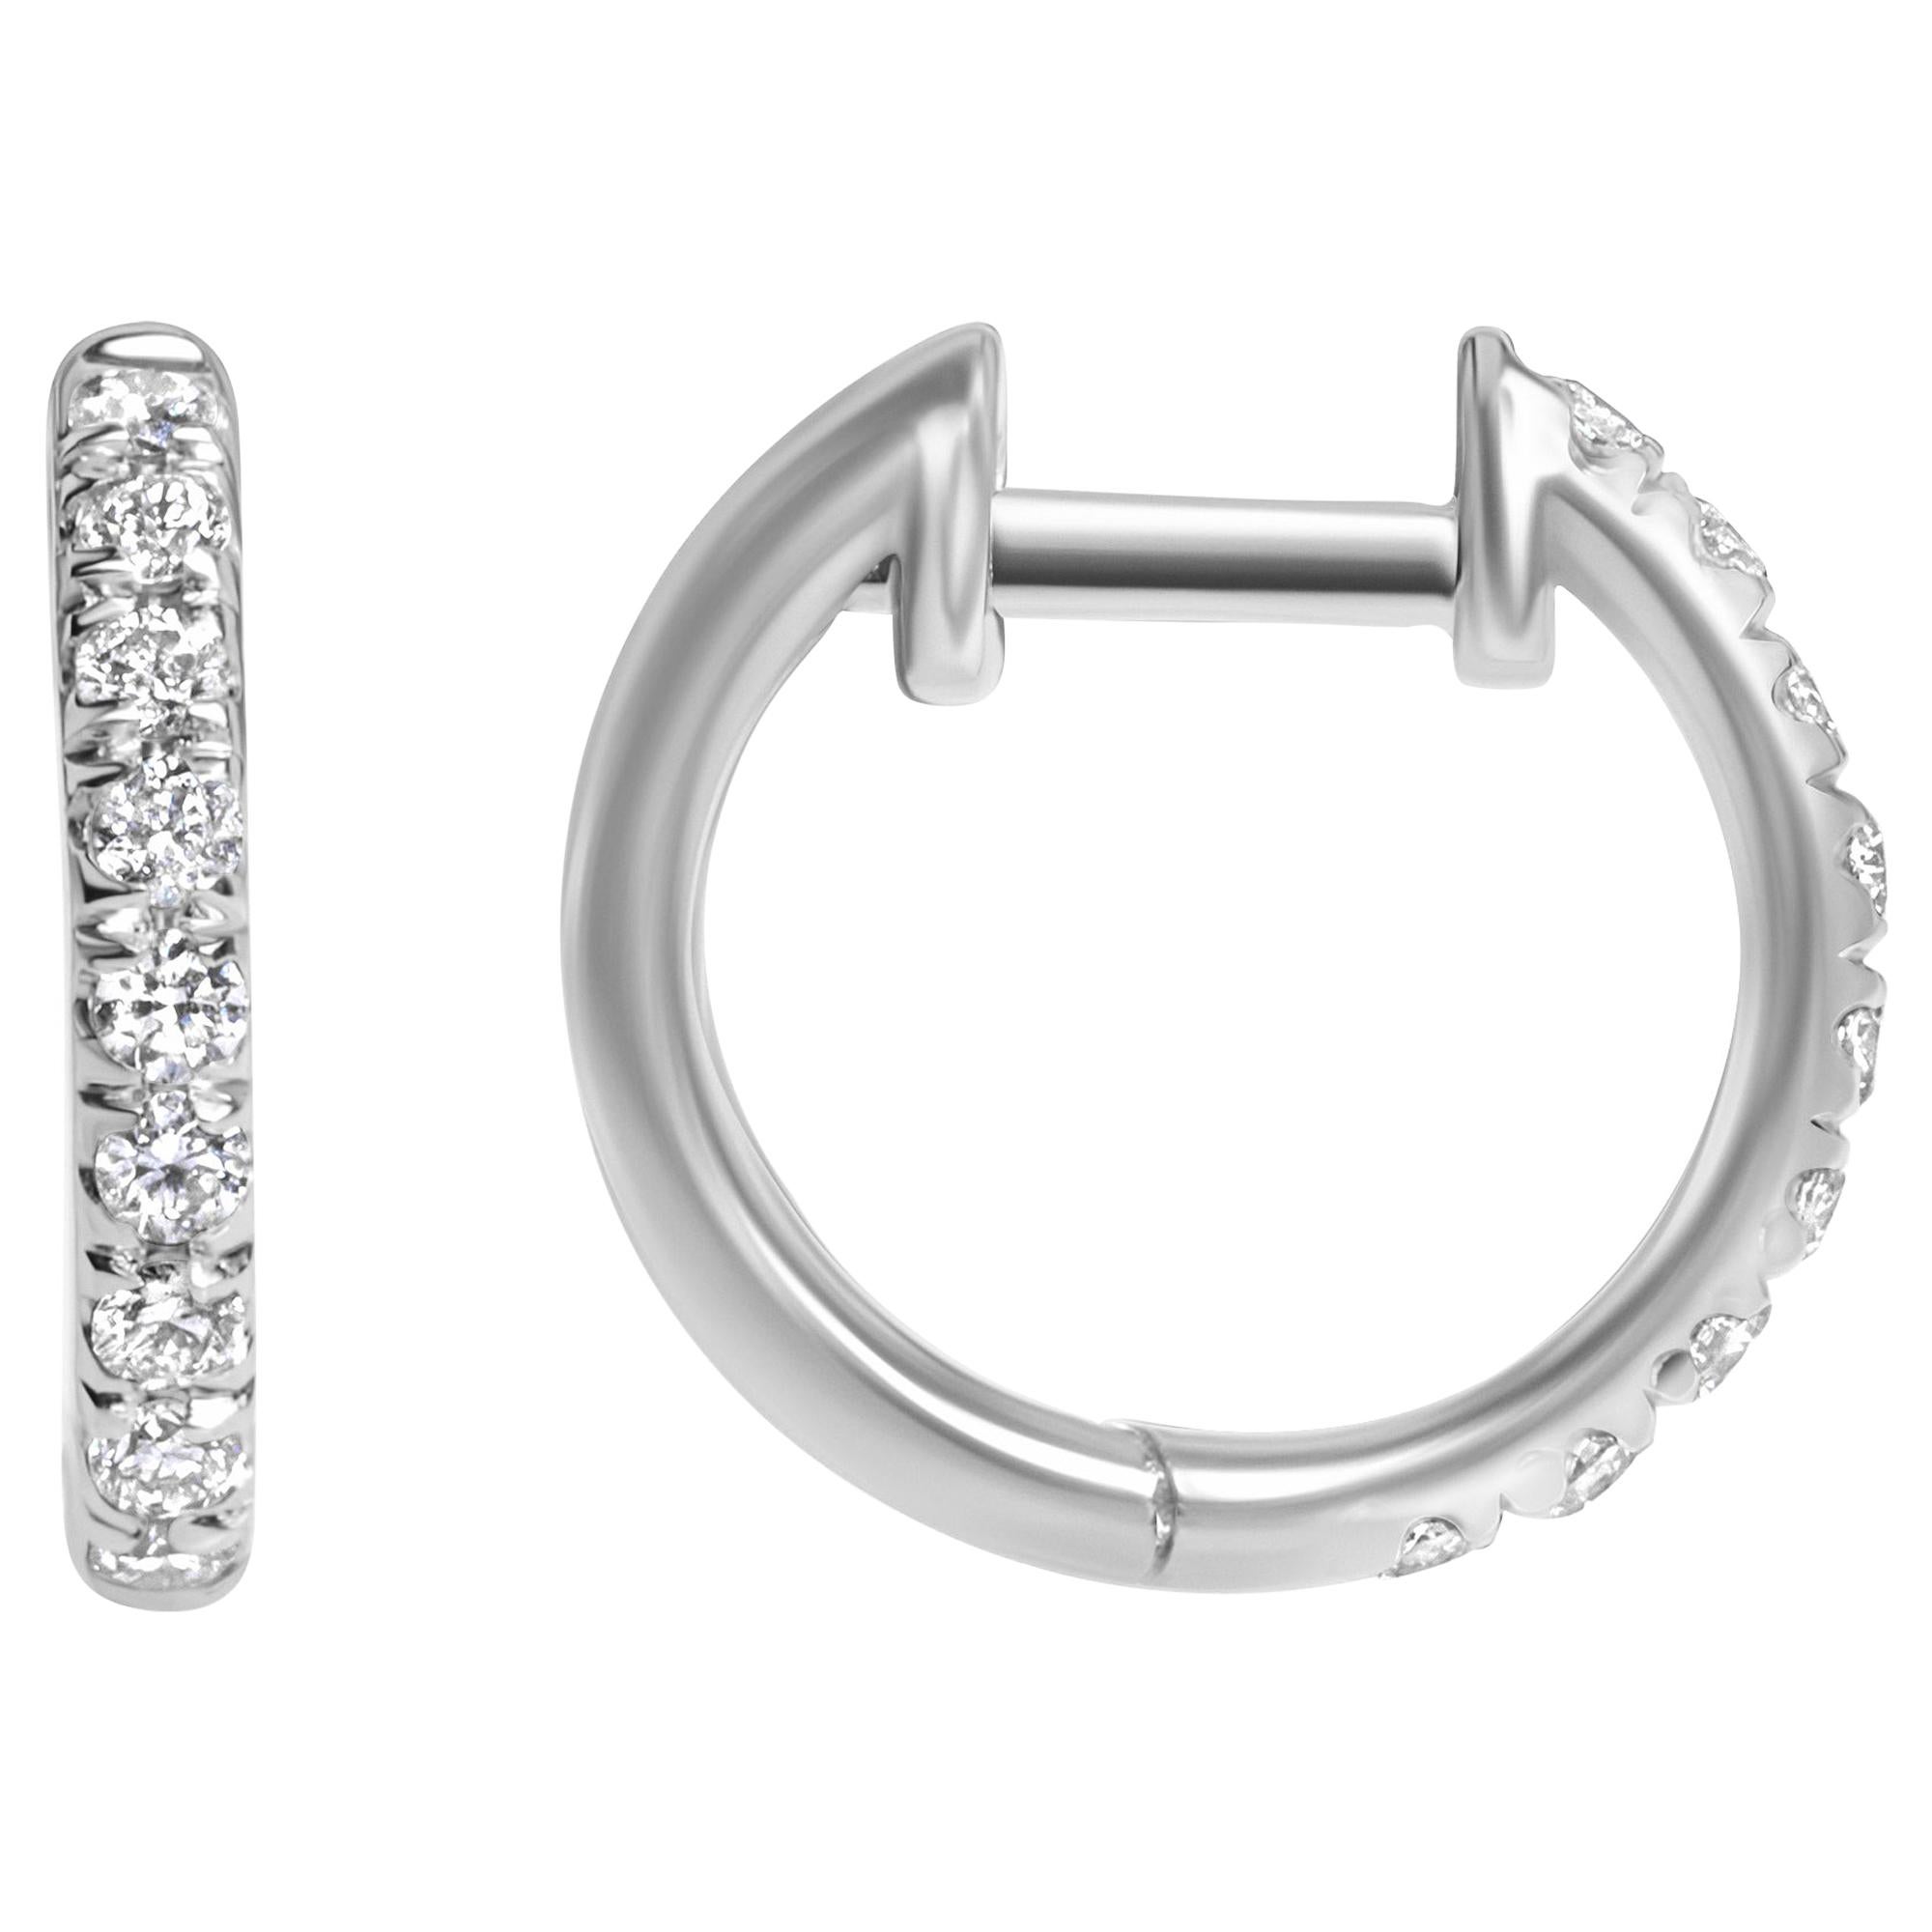 0.27 Carat Lori Diamond Hoop Earrings in 14 Karat White Gold - Shlomit Rogel For Sale